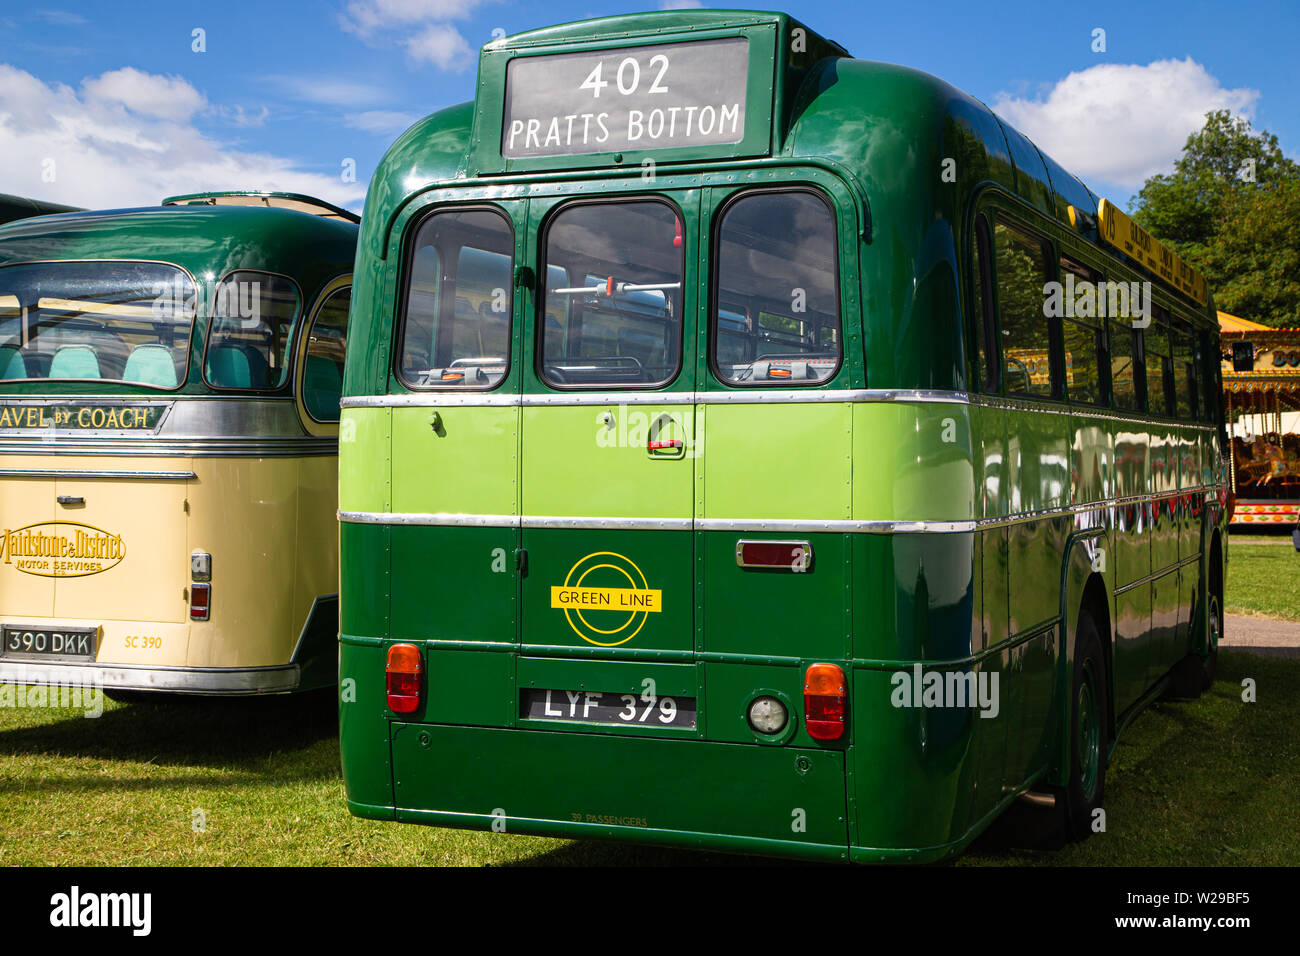 90 Kent County zeigen, Detling, 6. Juli 2019. Alte historische Greenline Bus Nummer 402 bis Pratts unten gehen. Stockfoto